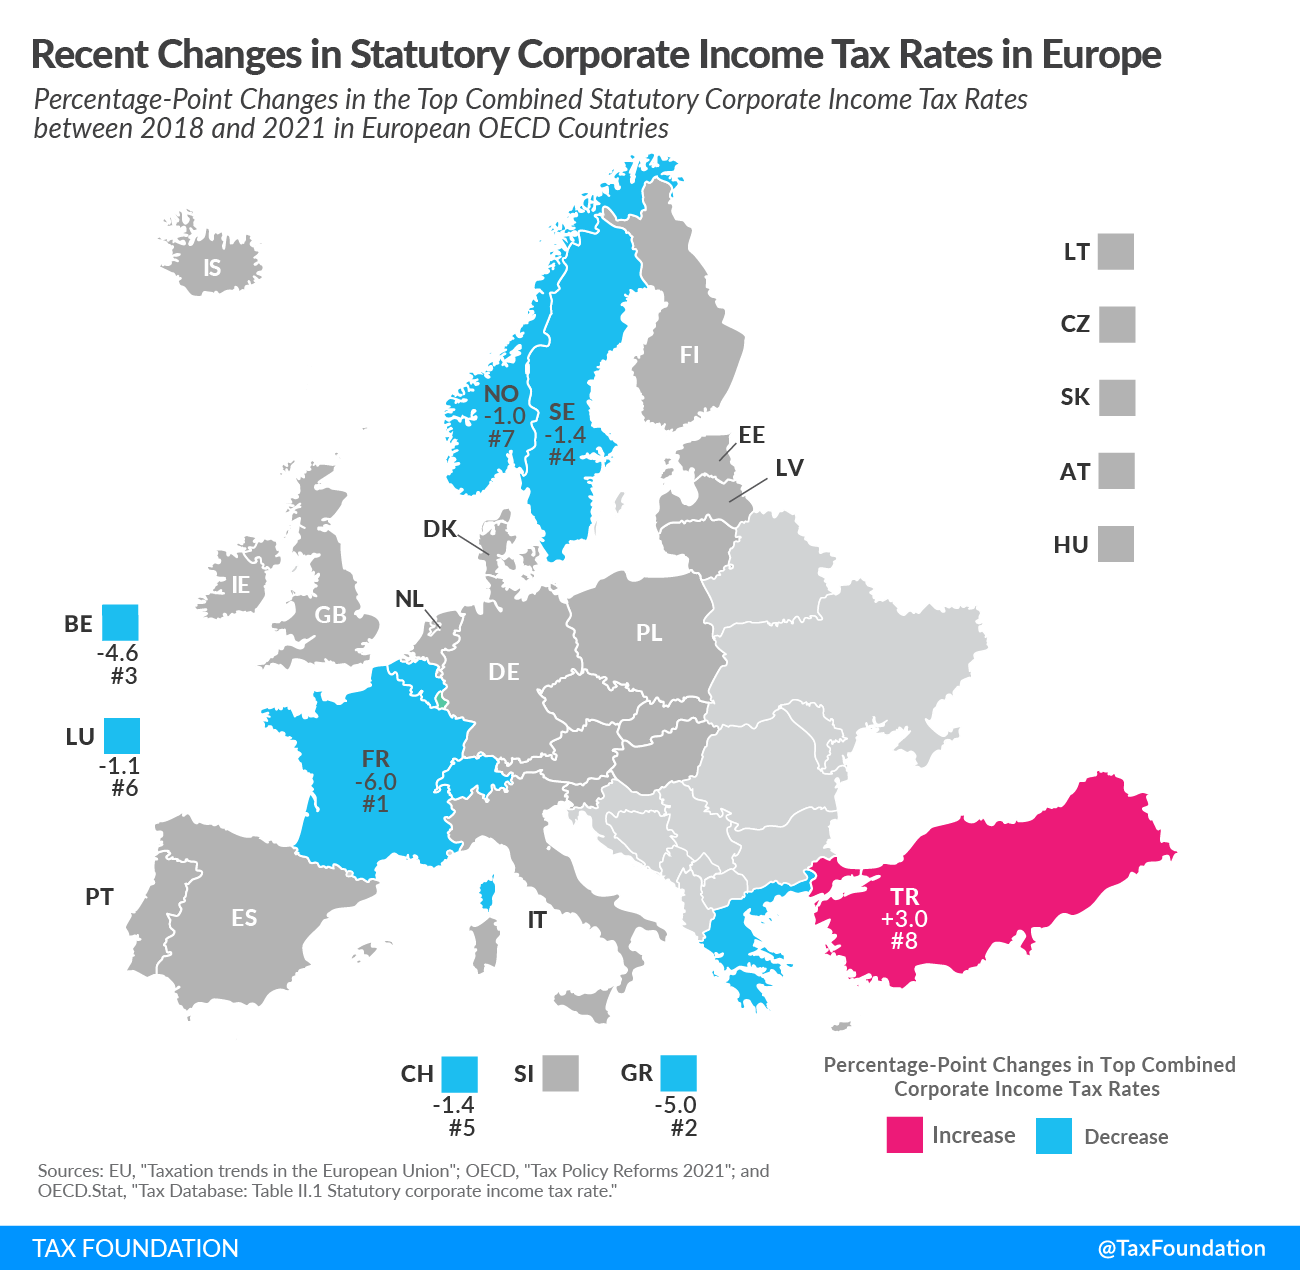 Recent corporate tax trends in Europe 2018-2021 Recent Changes in Corporate Income Tax Rates in Europe, 2018-2021